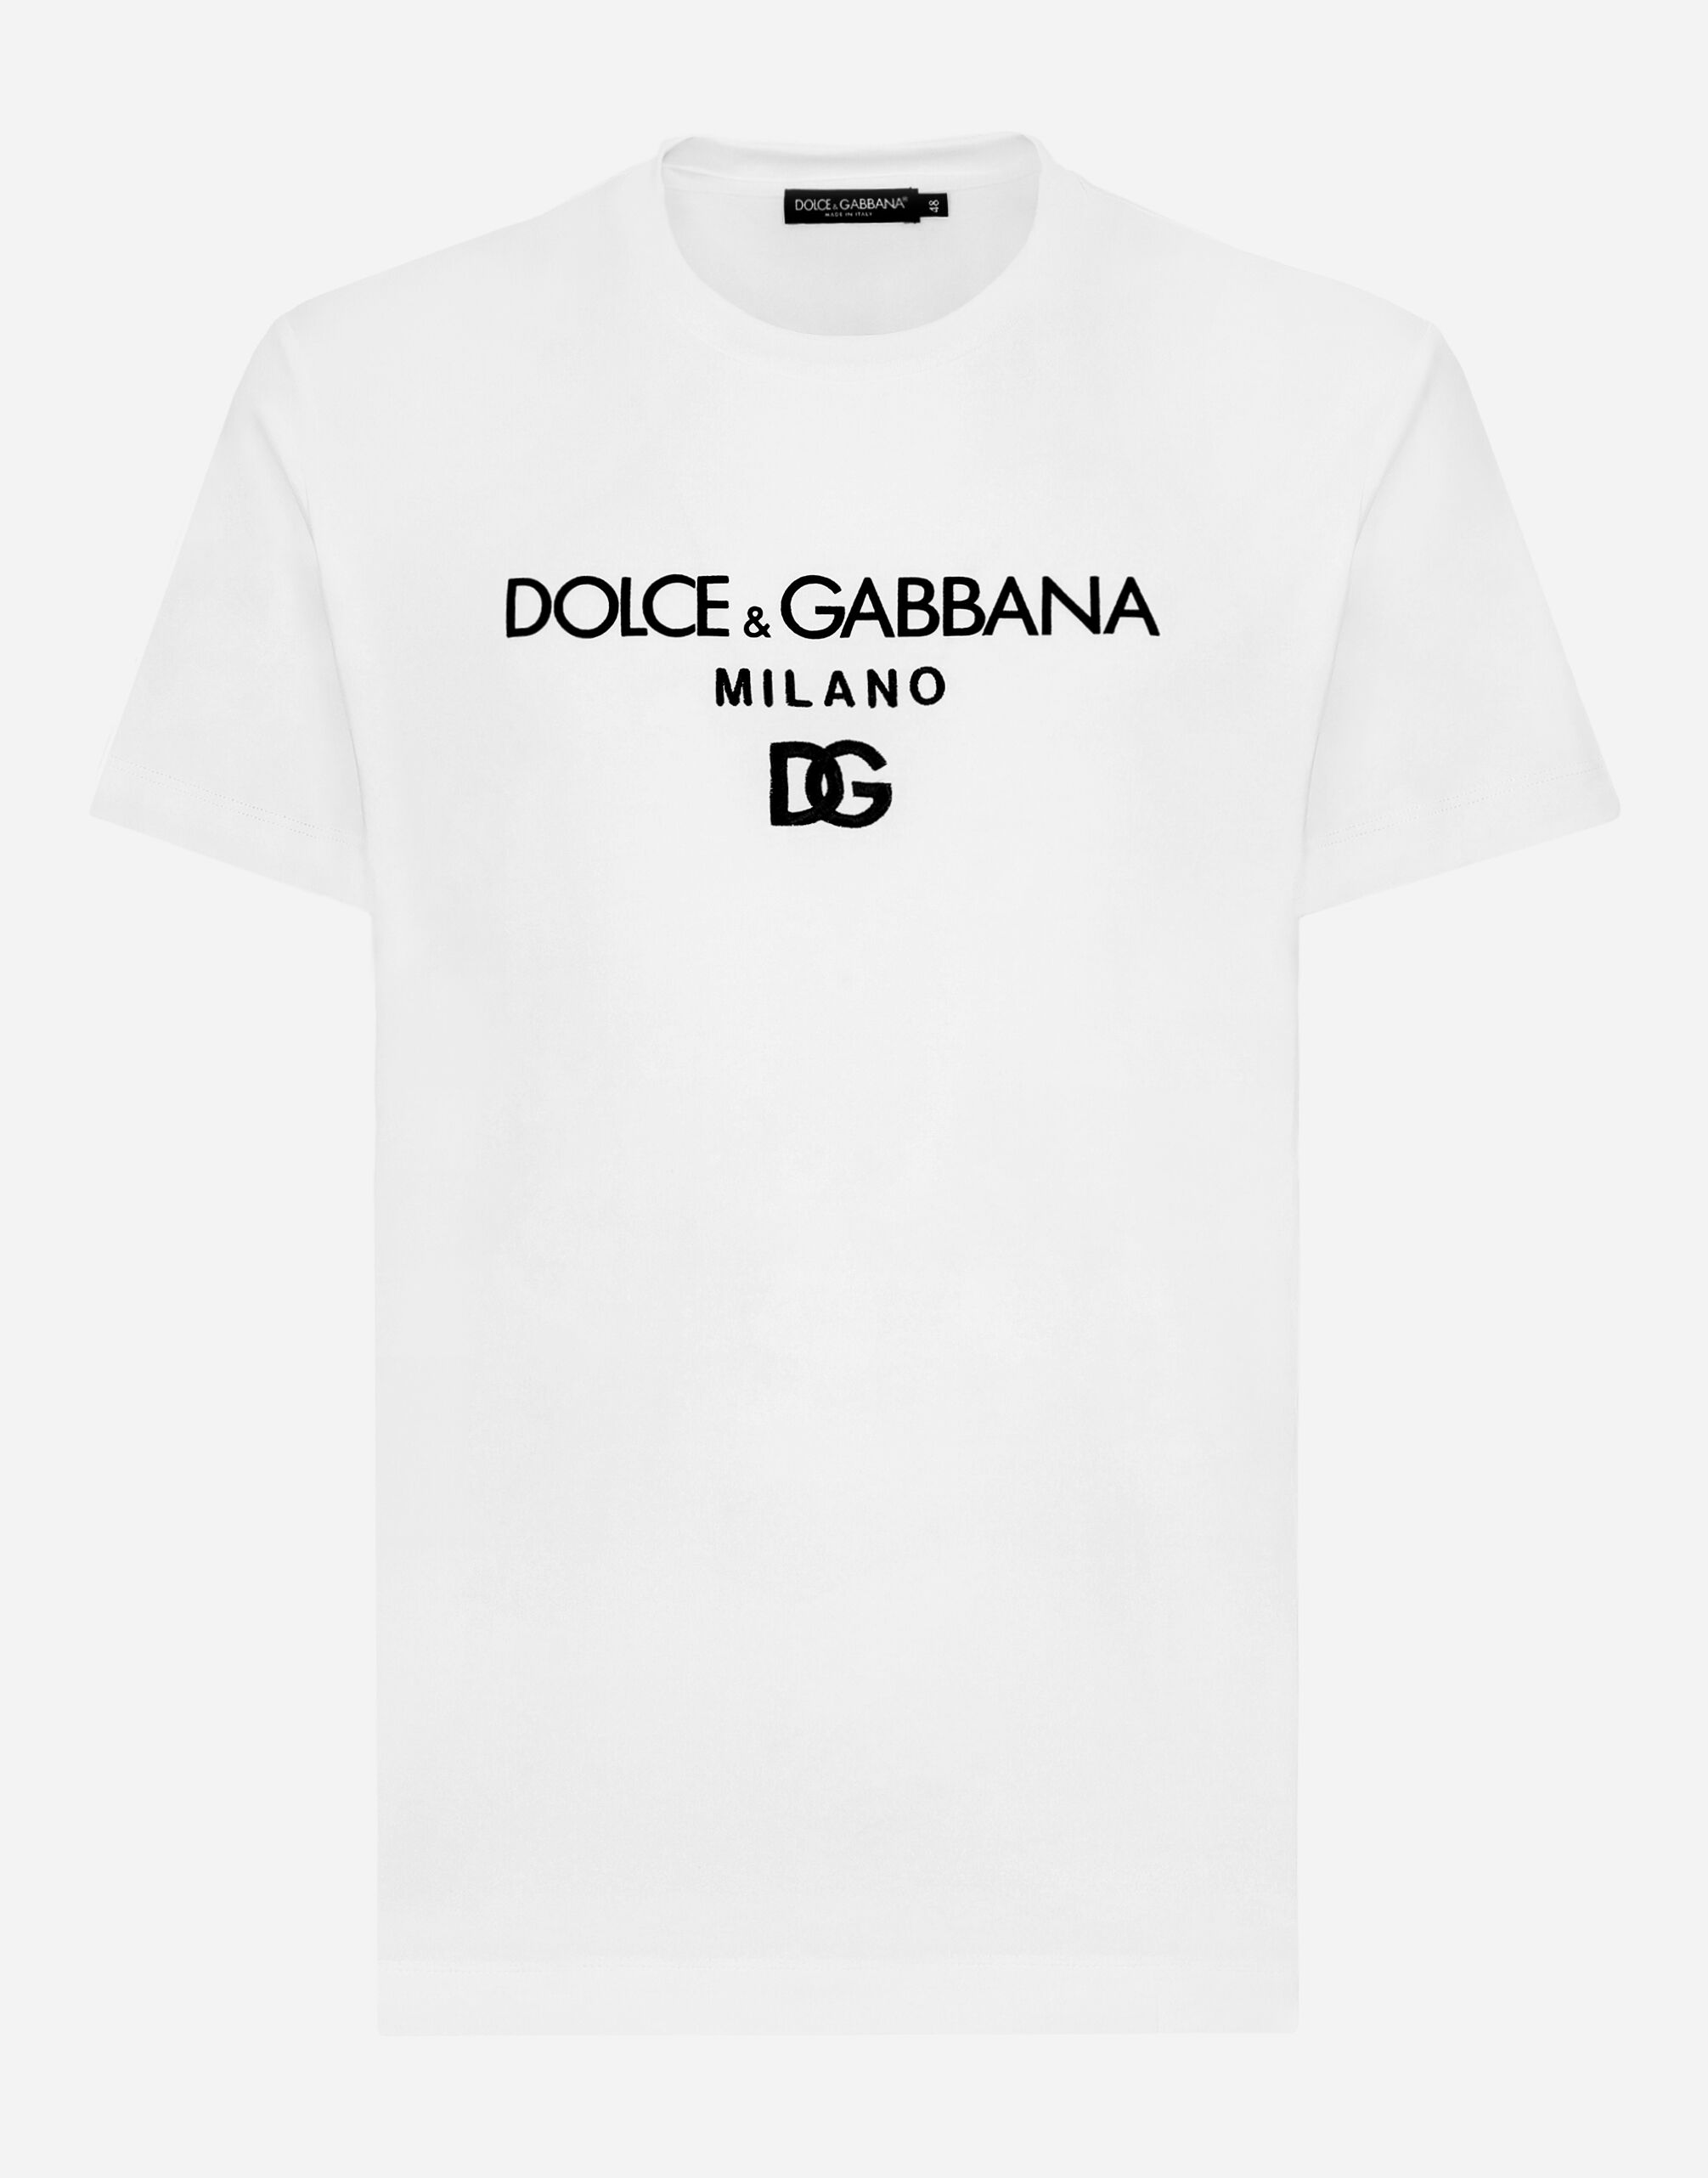 Dolce & Gabbana Cotton T-shirt with DG embroidery Black G5JG4TFU5U8